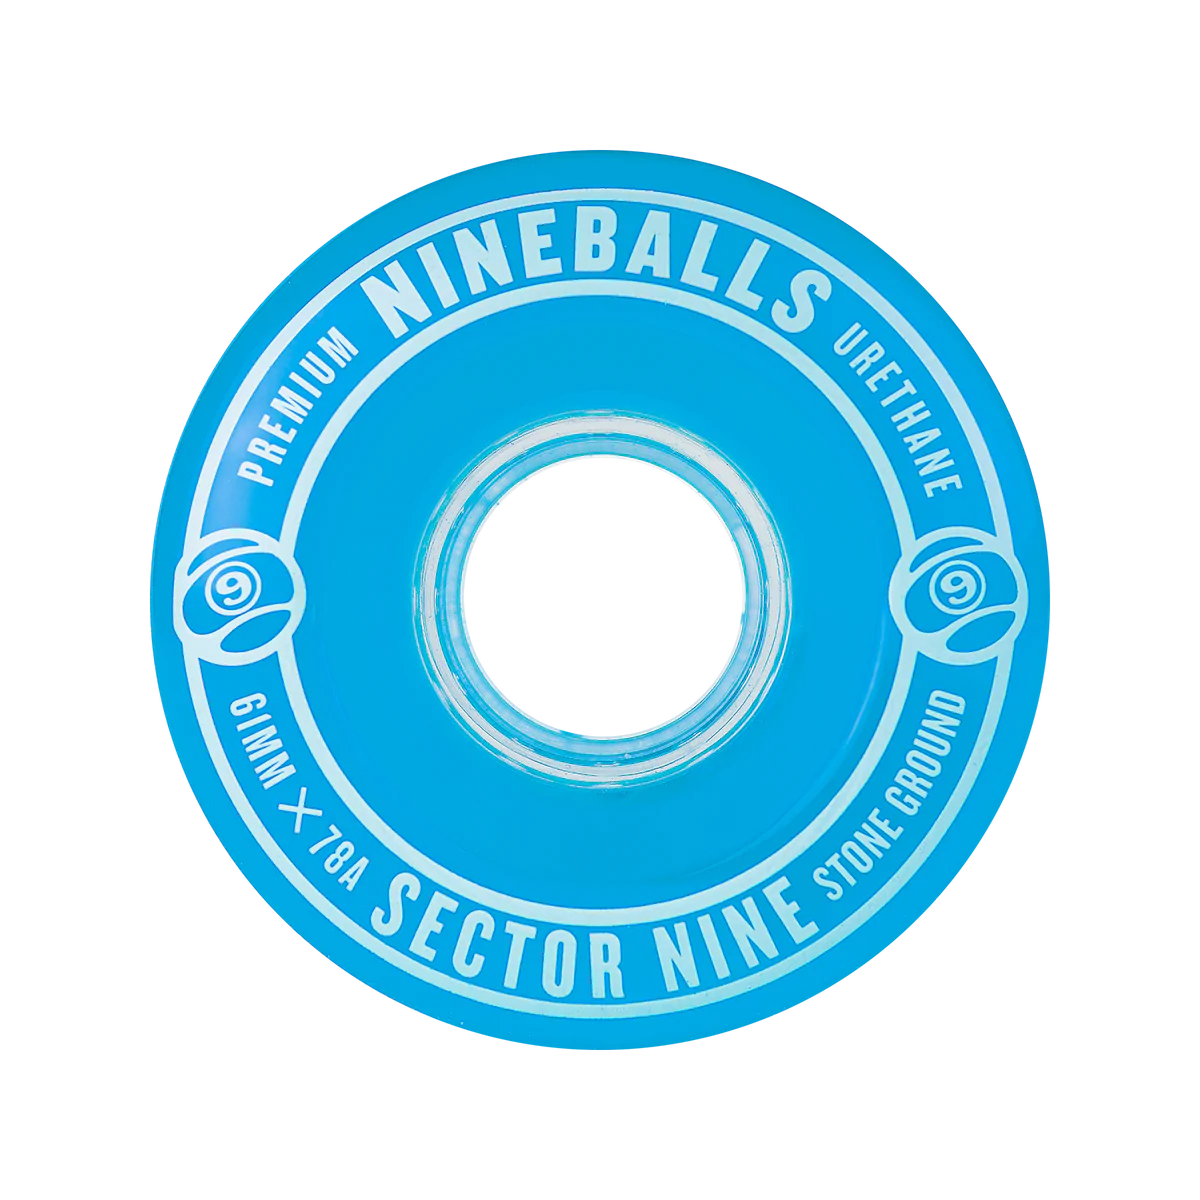 Sector 9 Nineballs 61mm Longboard Wheels